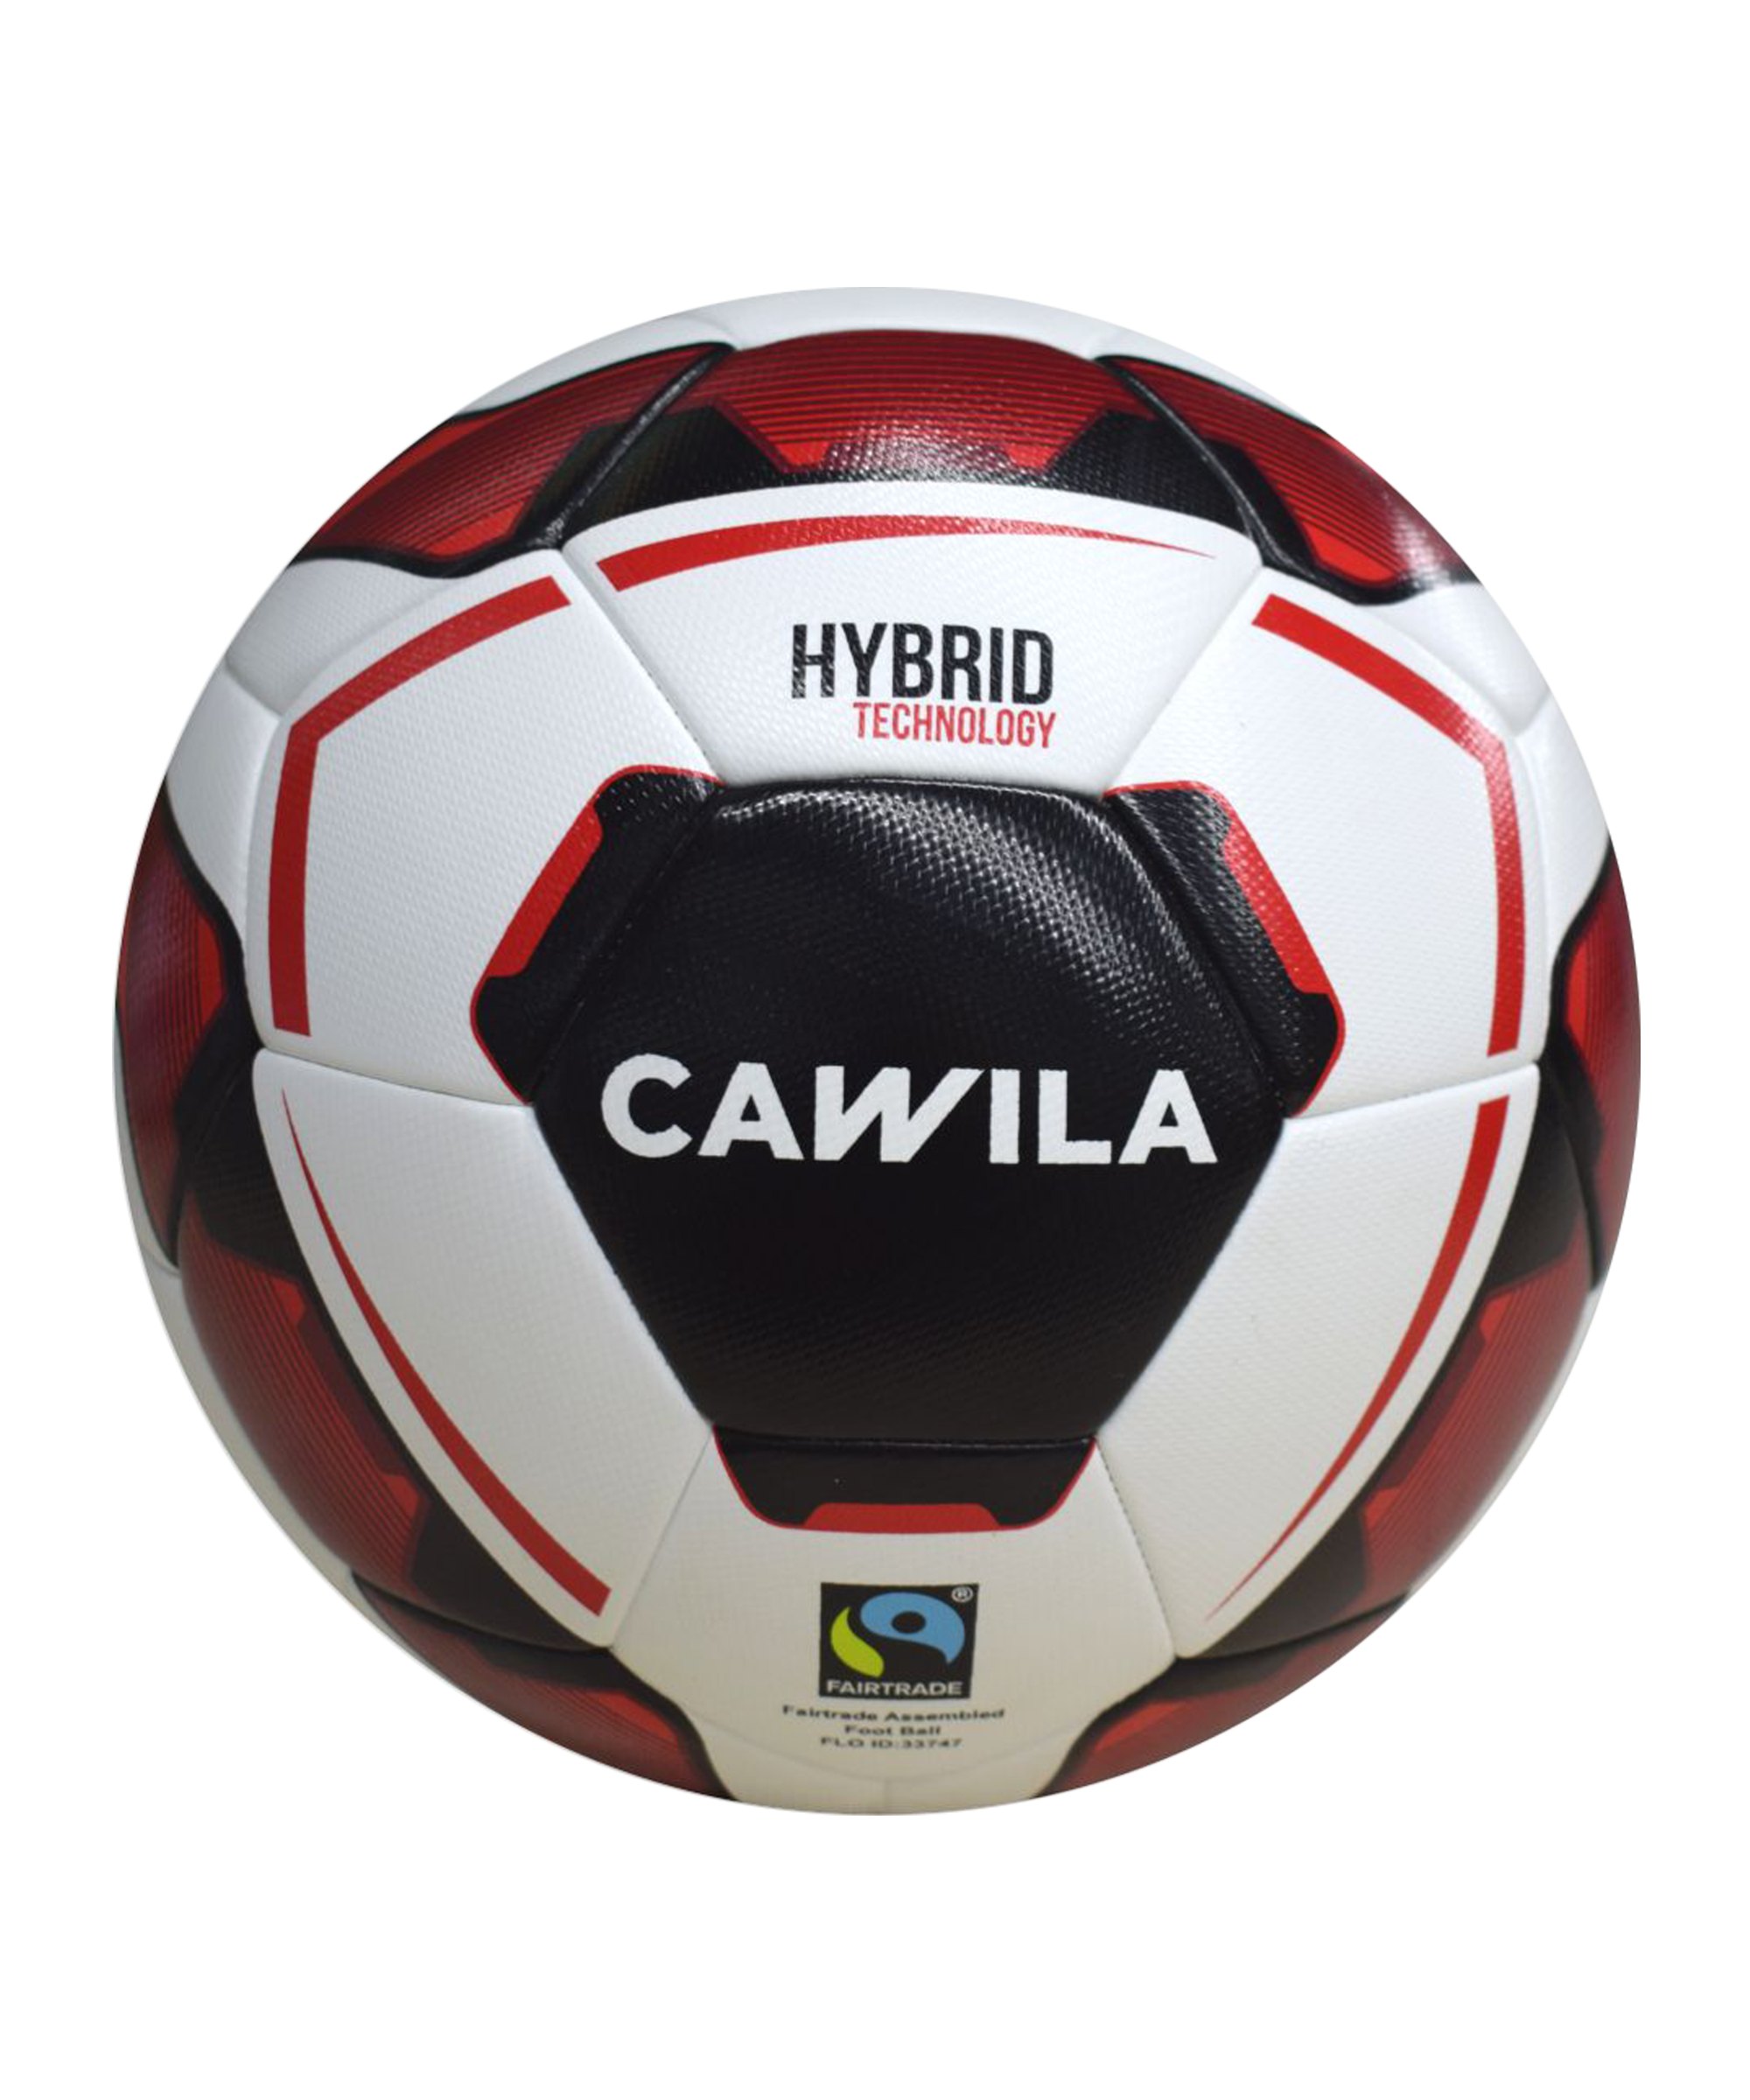 Cawila MISSION HYBRID Fairtrade Trainingsball Gr. 5 - weiss